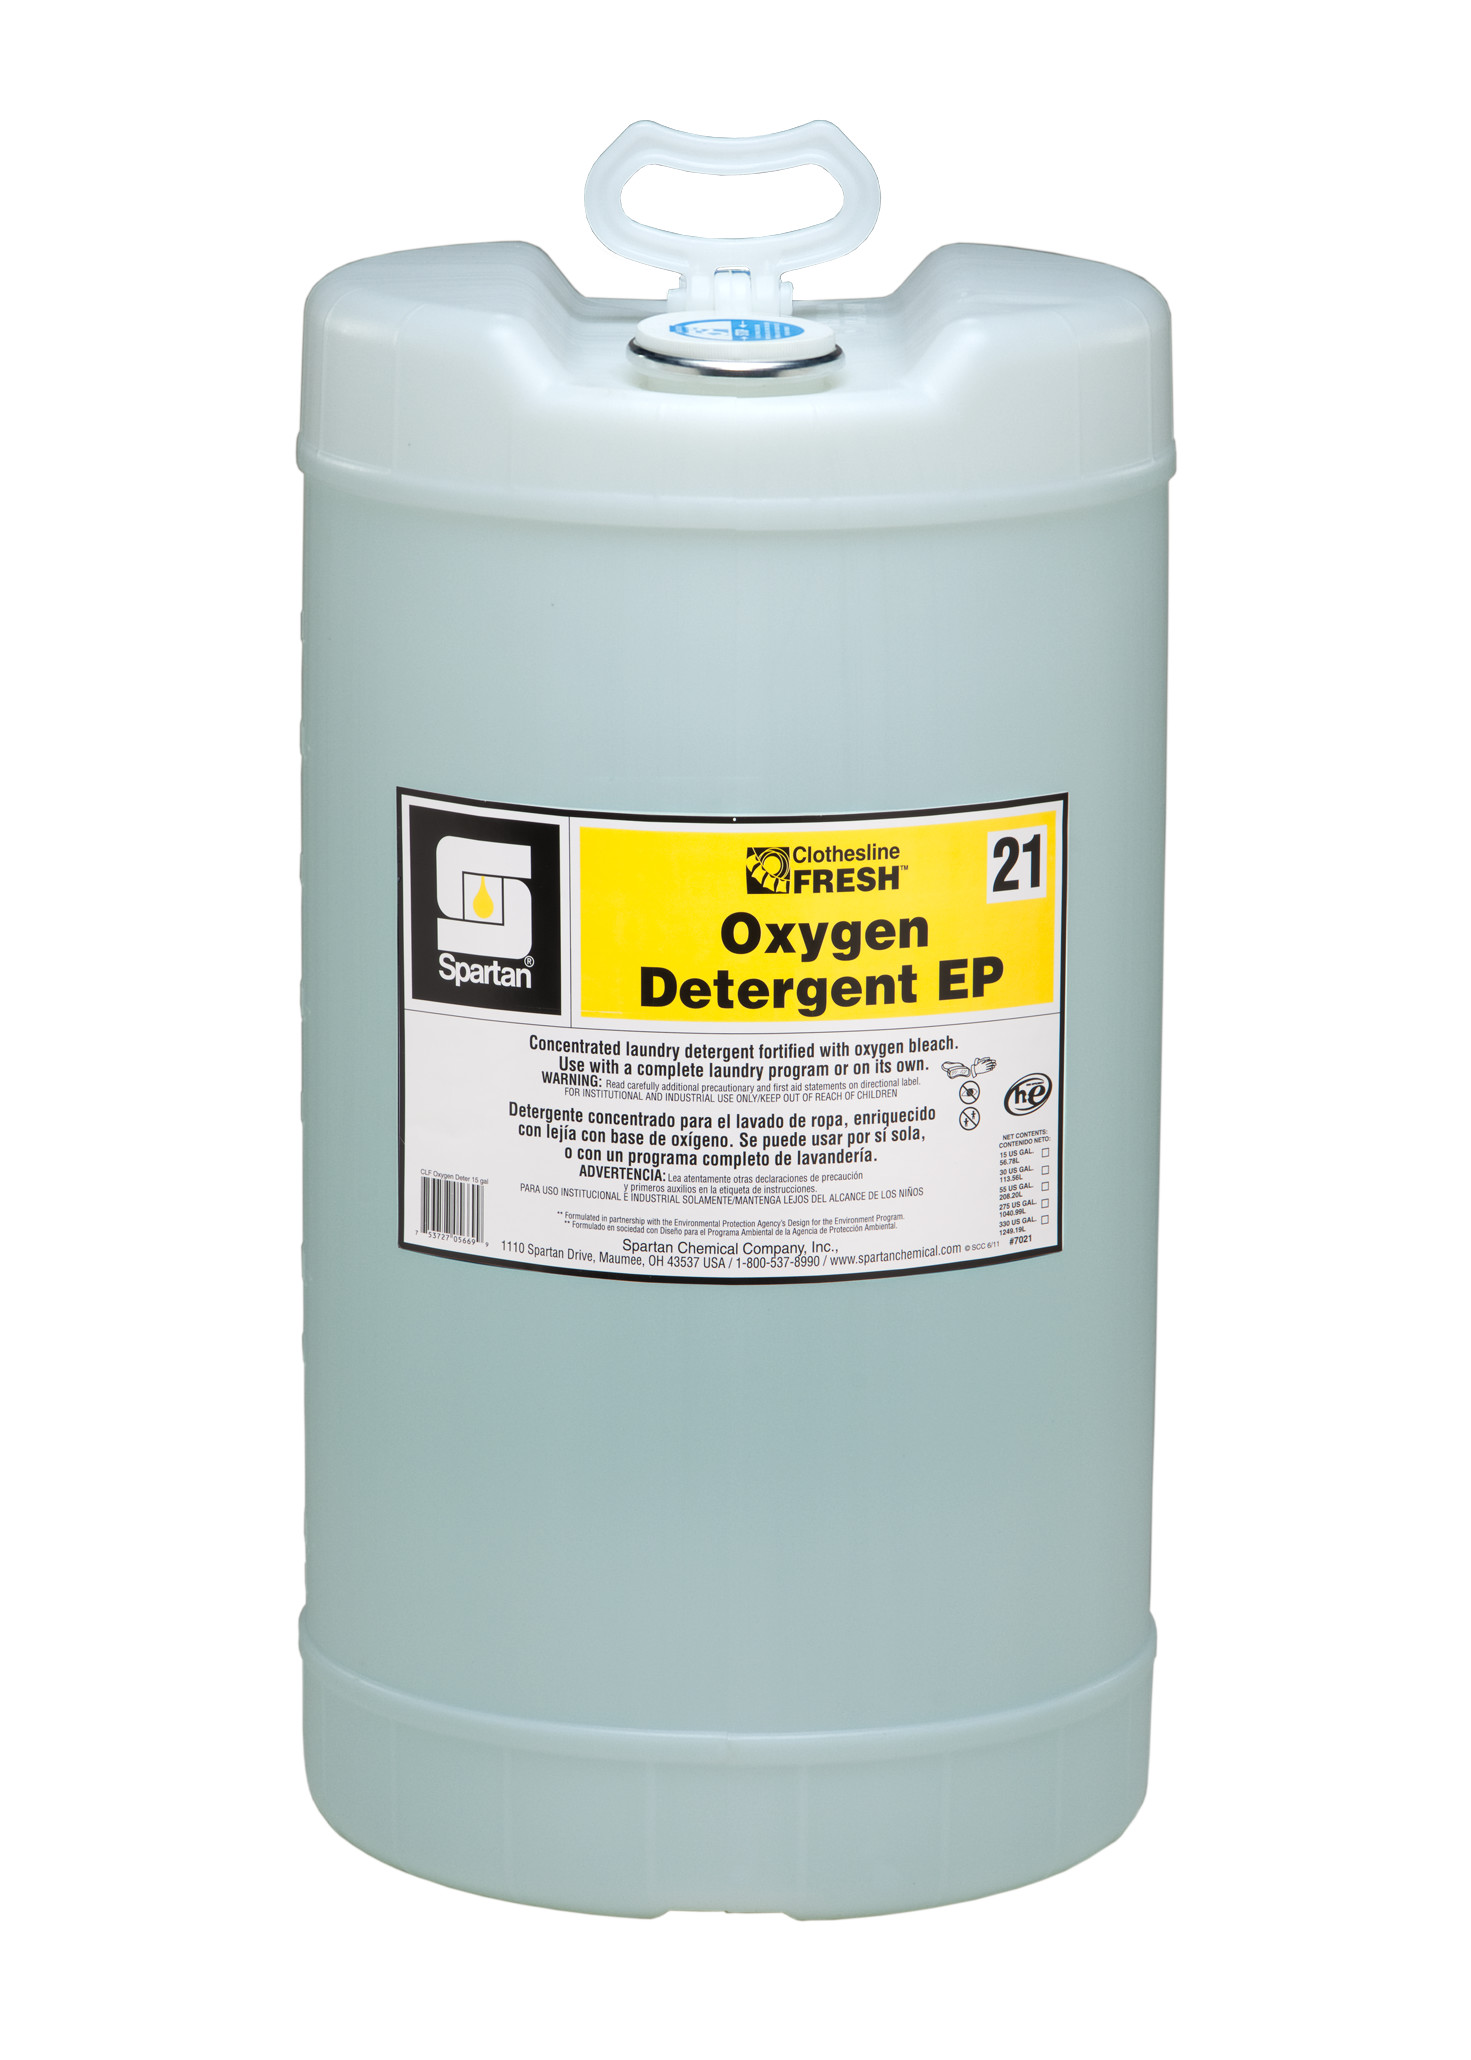 Spartan Chemical Company Clothesline Fresh Oxygen Detergent EP 21, 15 GAL DRUM